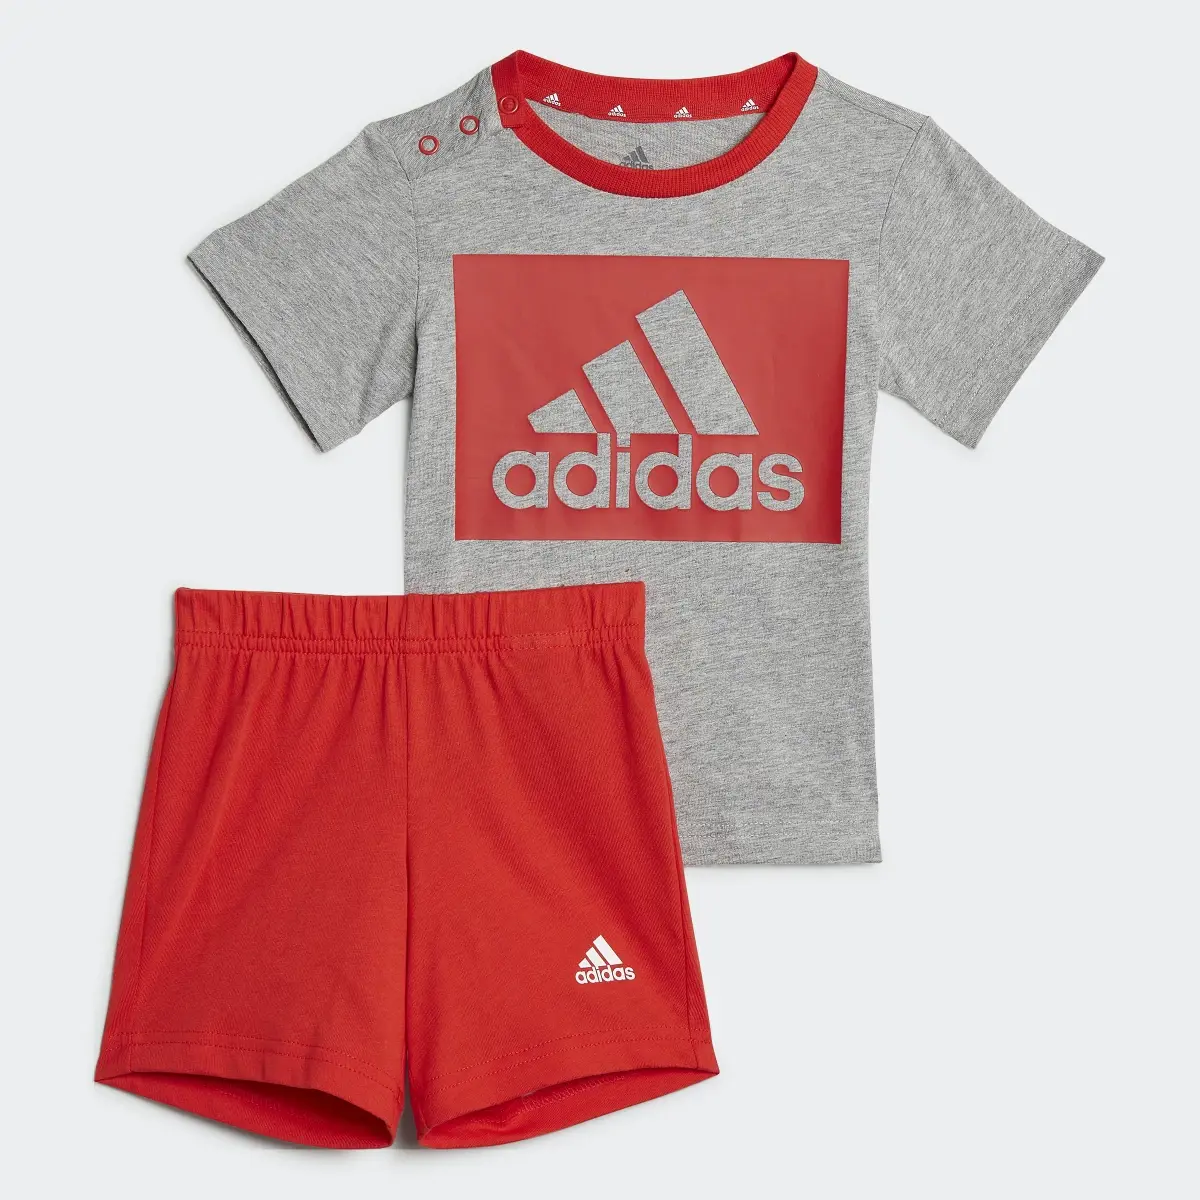 Adidas Essentials Tee and Shorts Set. 1